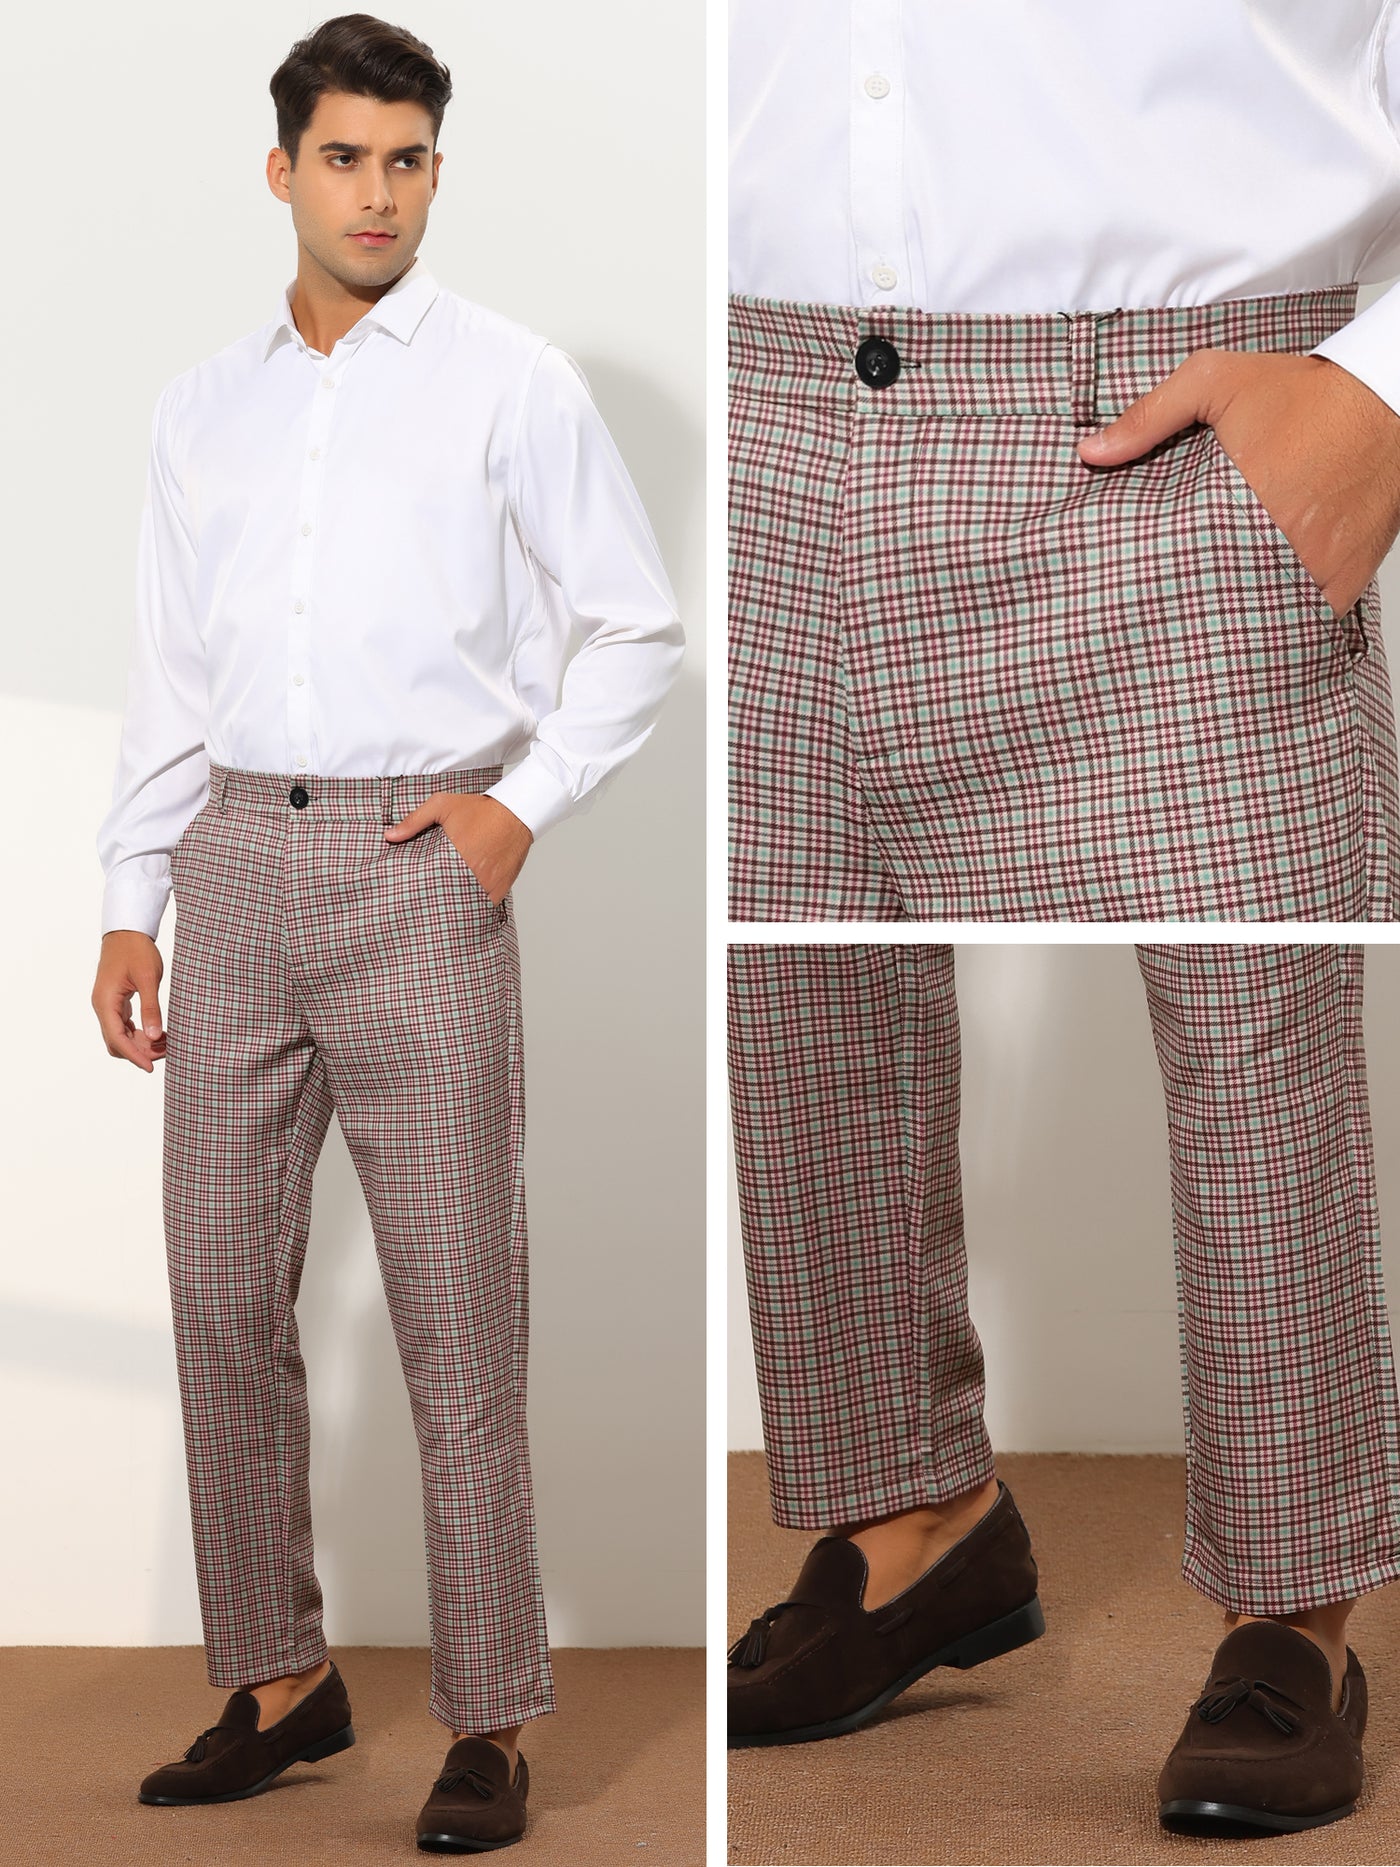 Bublédon Checked Dress Pants for Men's Button Closure Flat Front Business Plaid Pattern Trousers